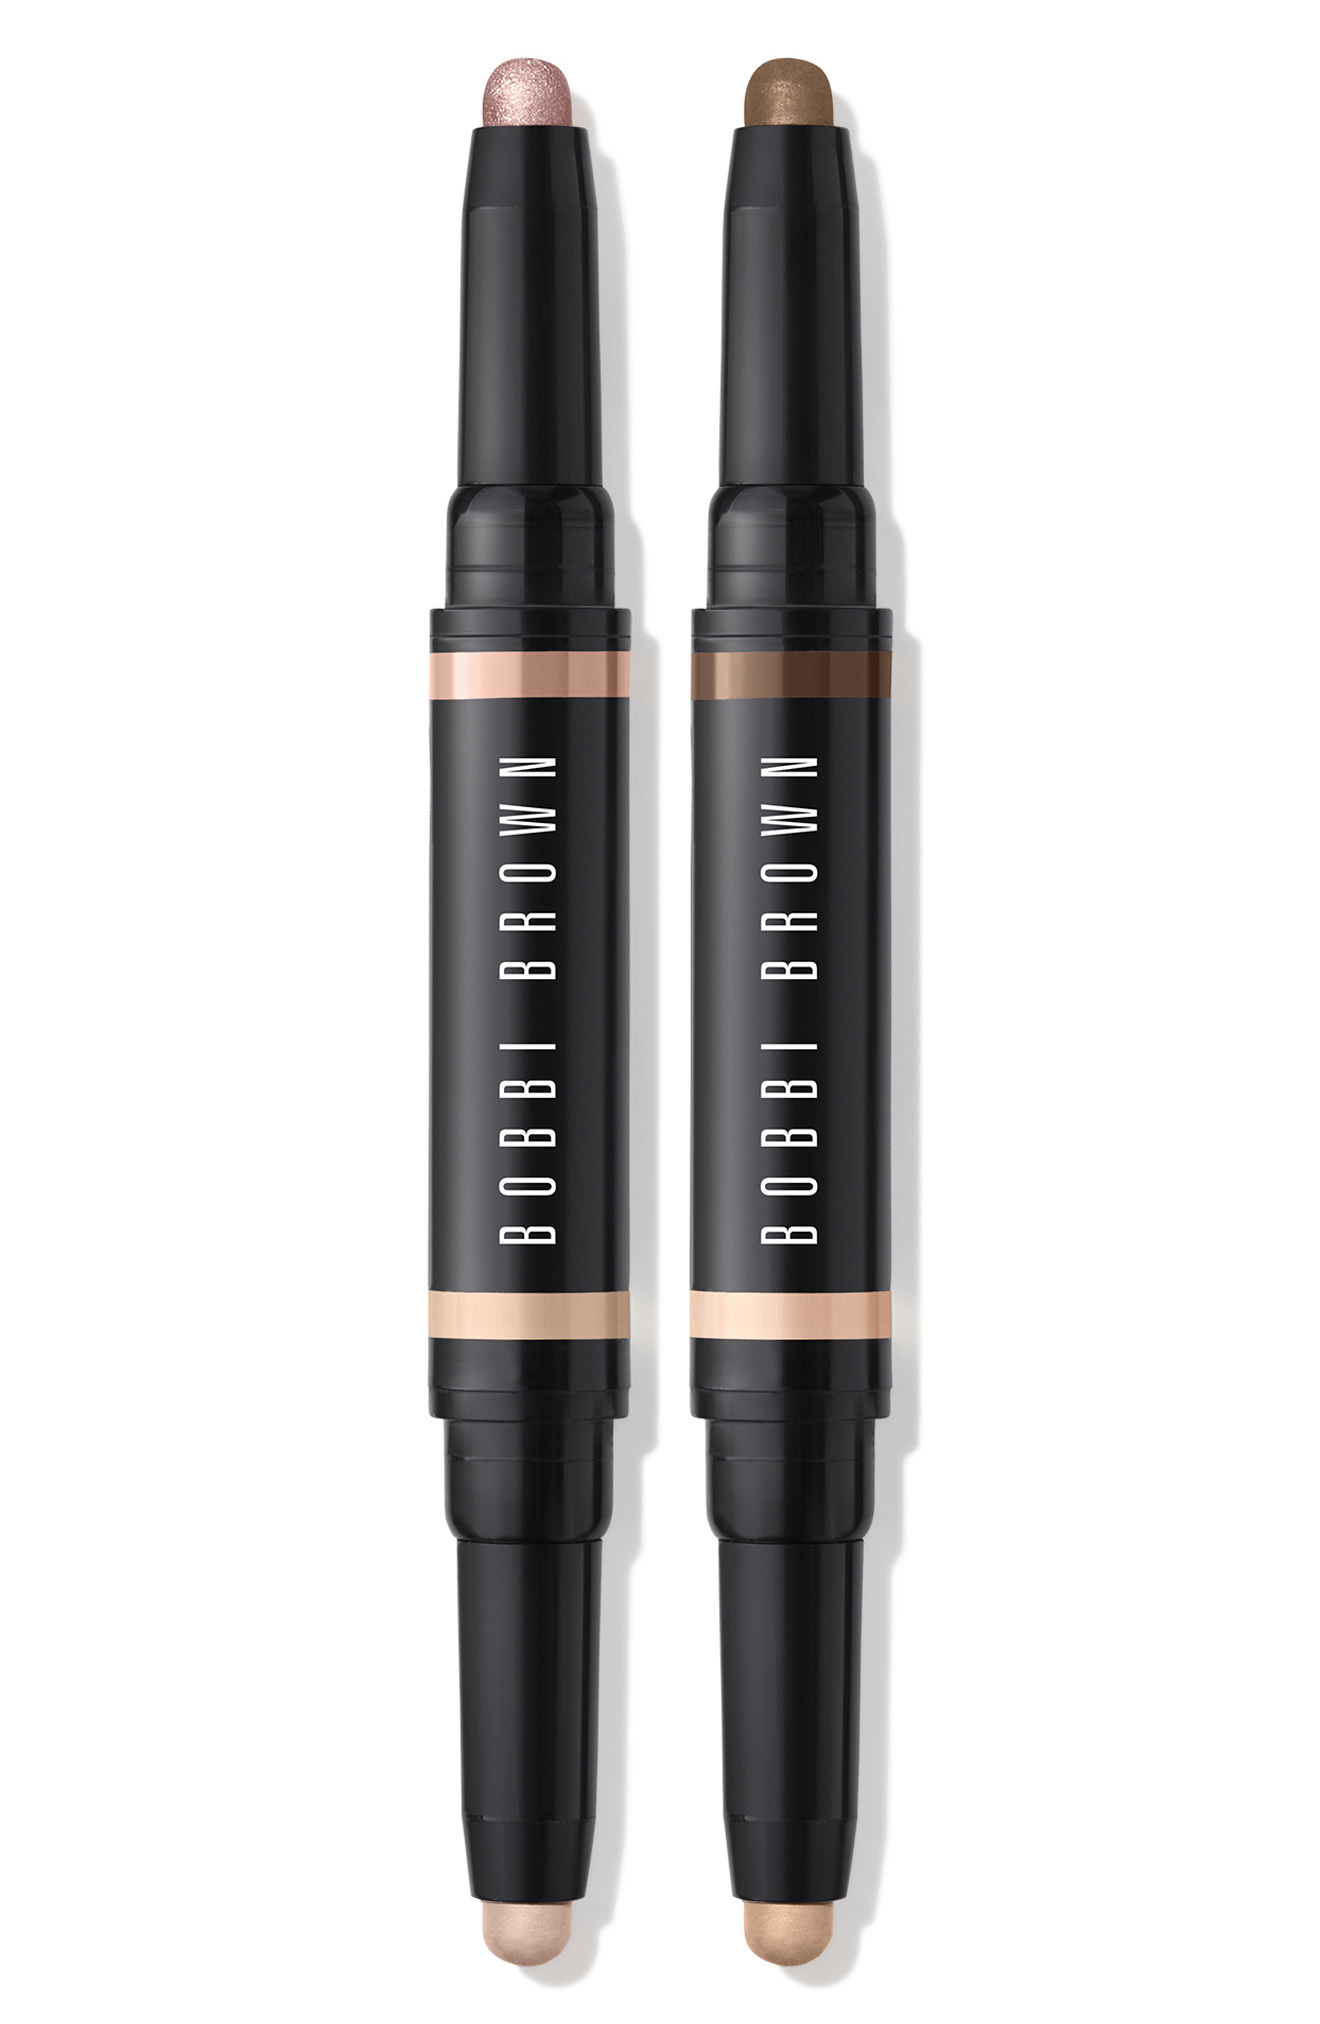 Bobbi Brown Cosmetics Dual-Ended Long-Wear Cream Shadow Stick Duo